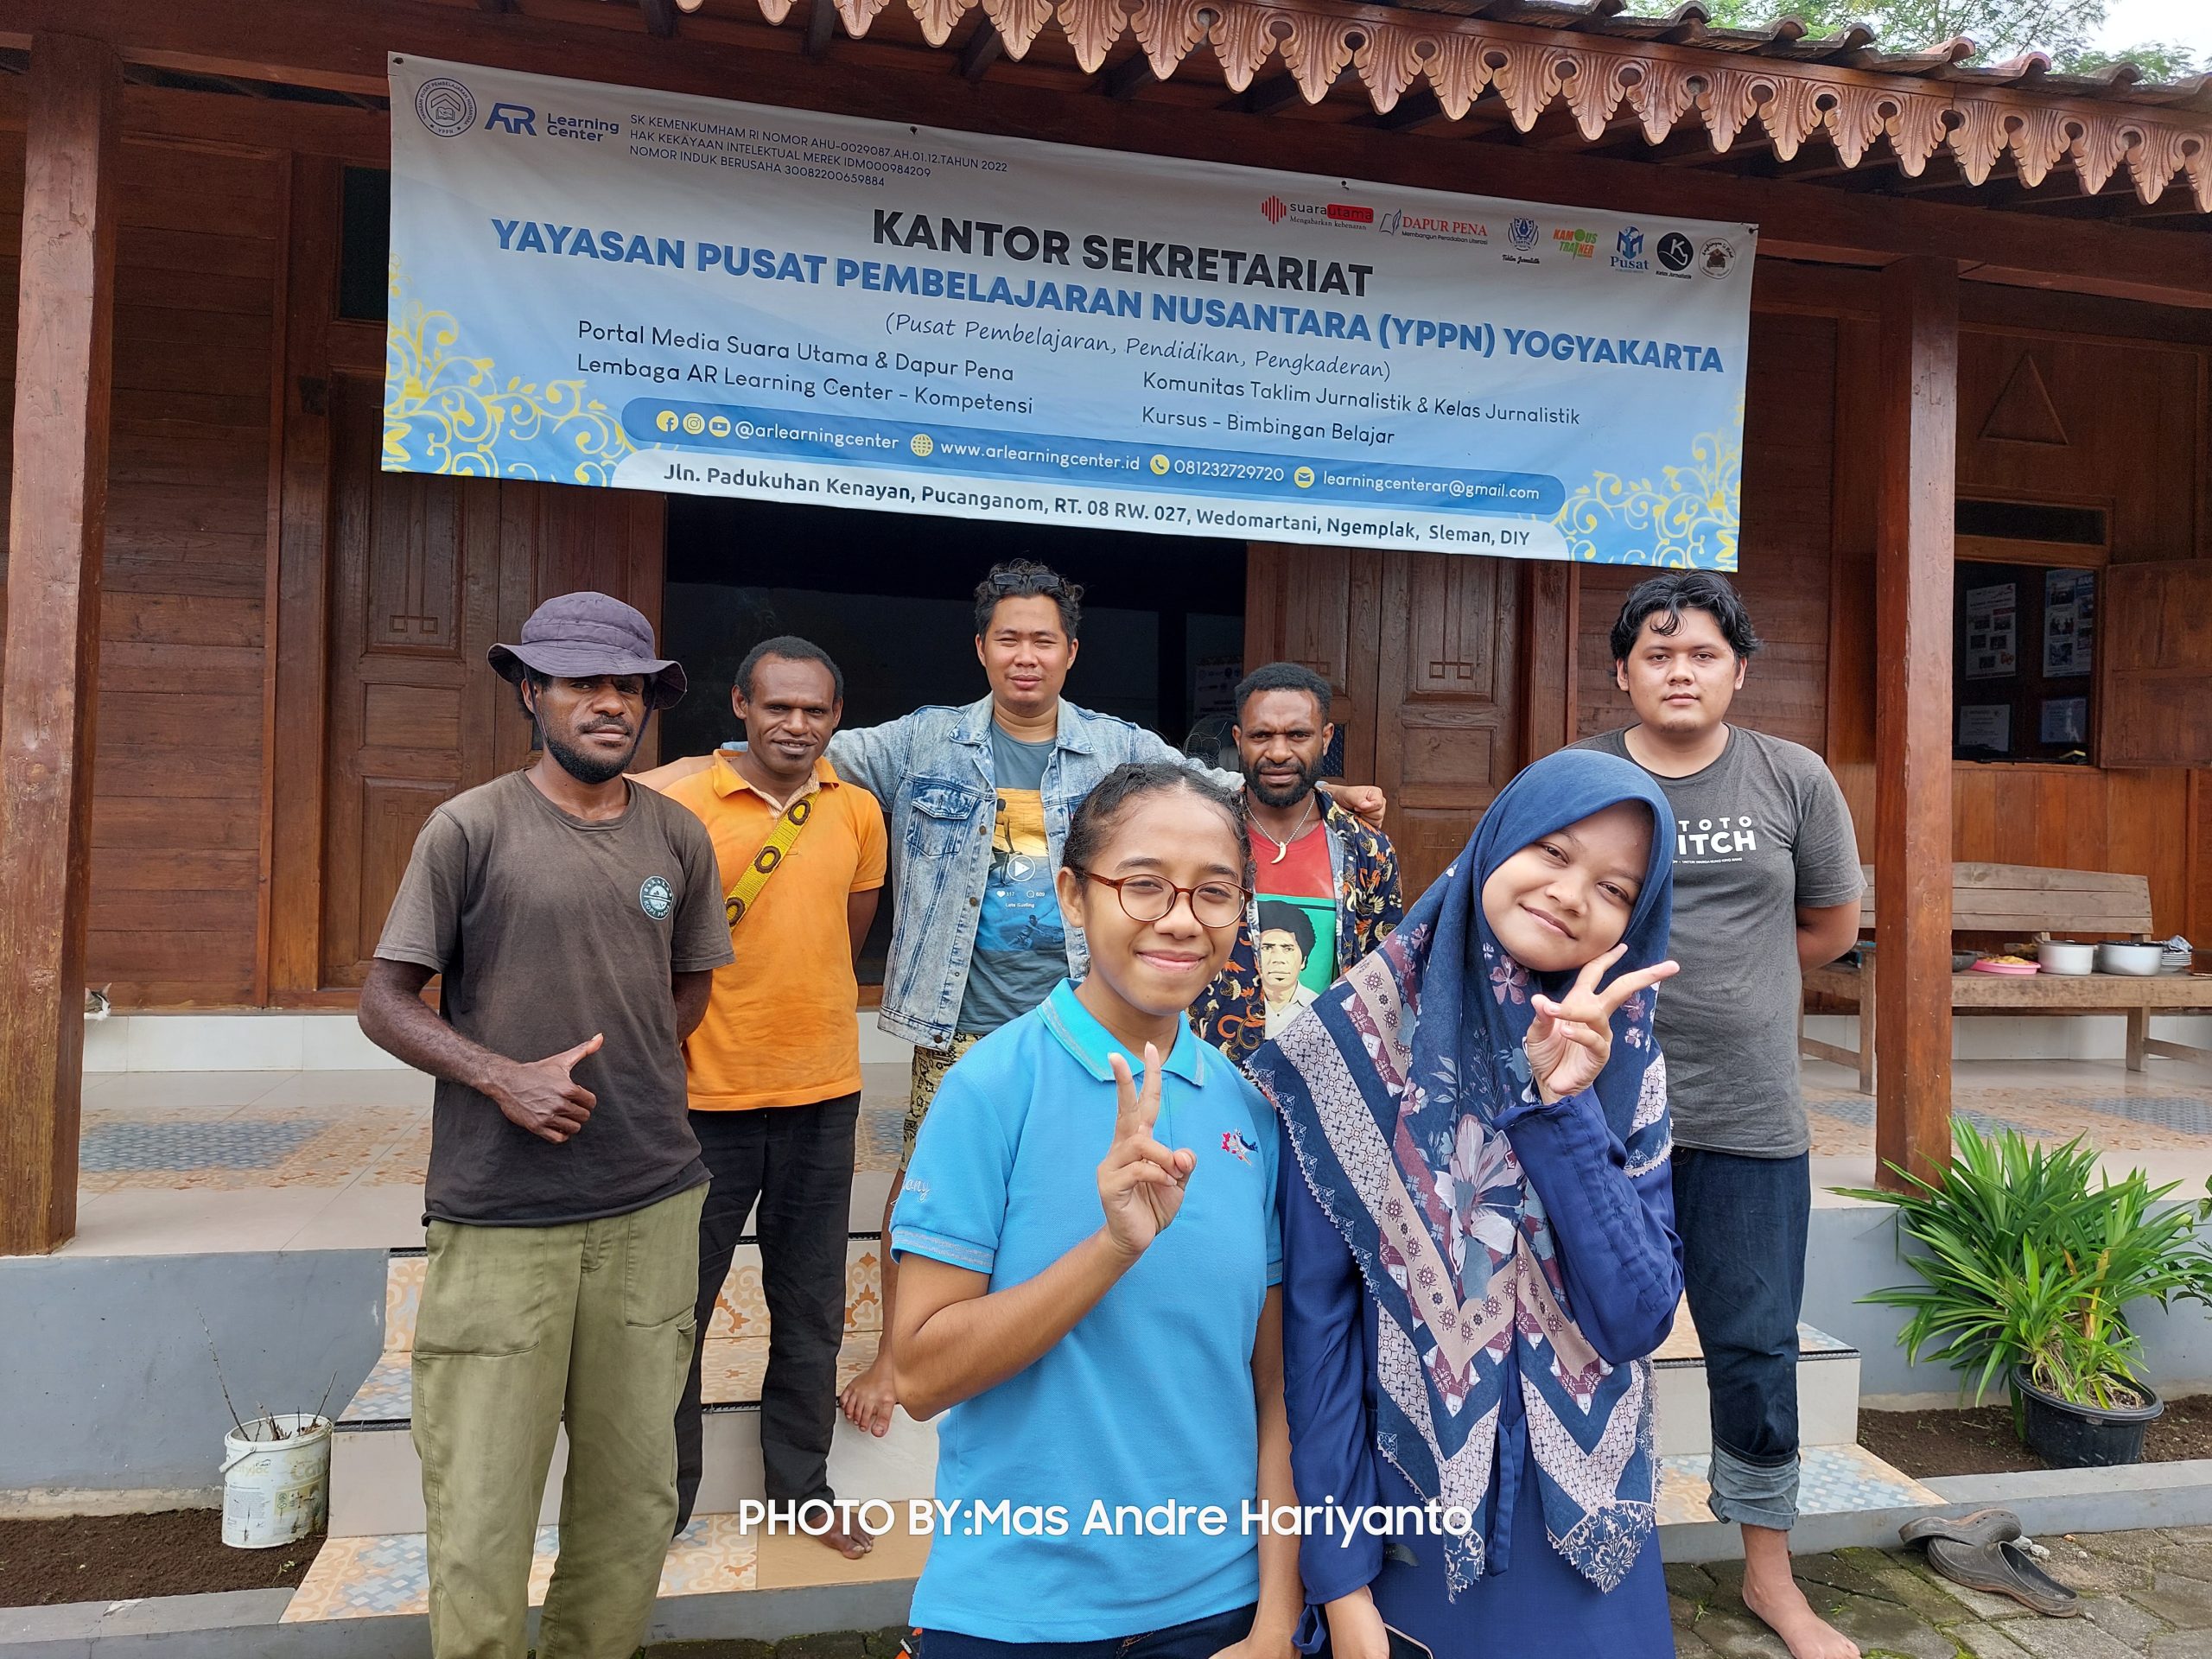 Foto: Staf AR Learning Center dan Wartawan Suara Utama Perwakilan Provinsi Papua Silaturahmi dan Berkunjung di Kantor Sekretariat Suara Utama ID/Mas Andre Hariyanto (SUARA UTAMA)